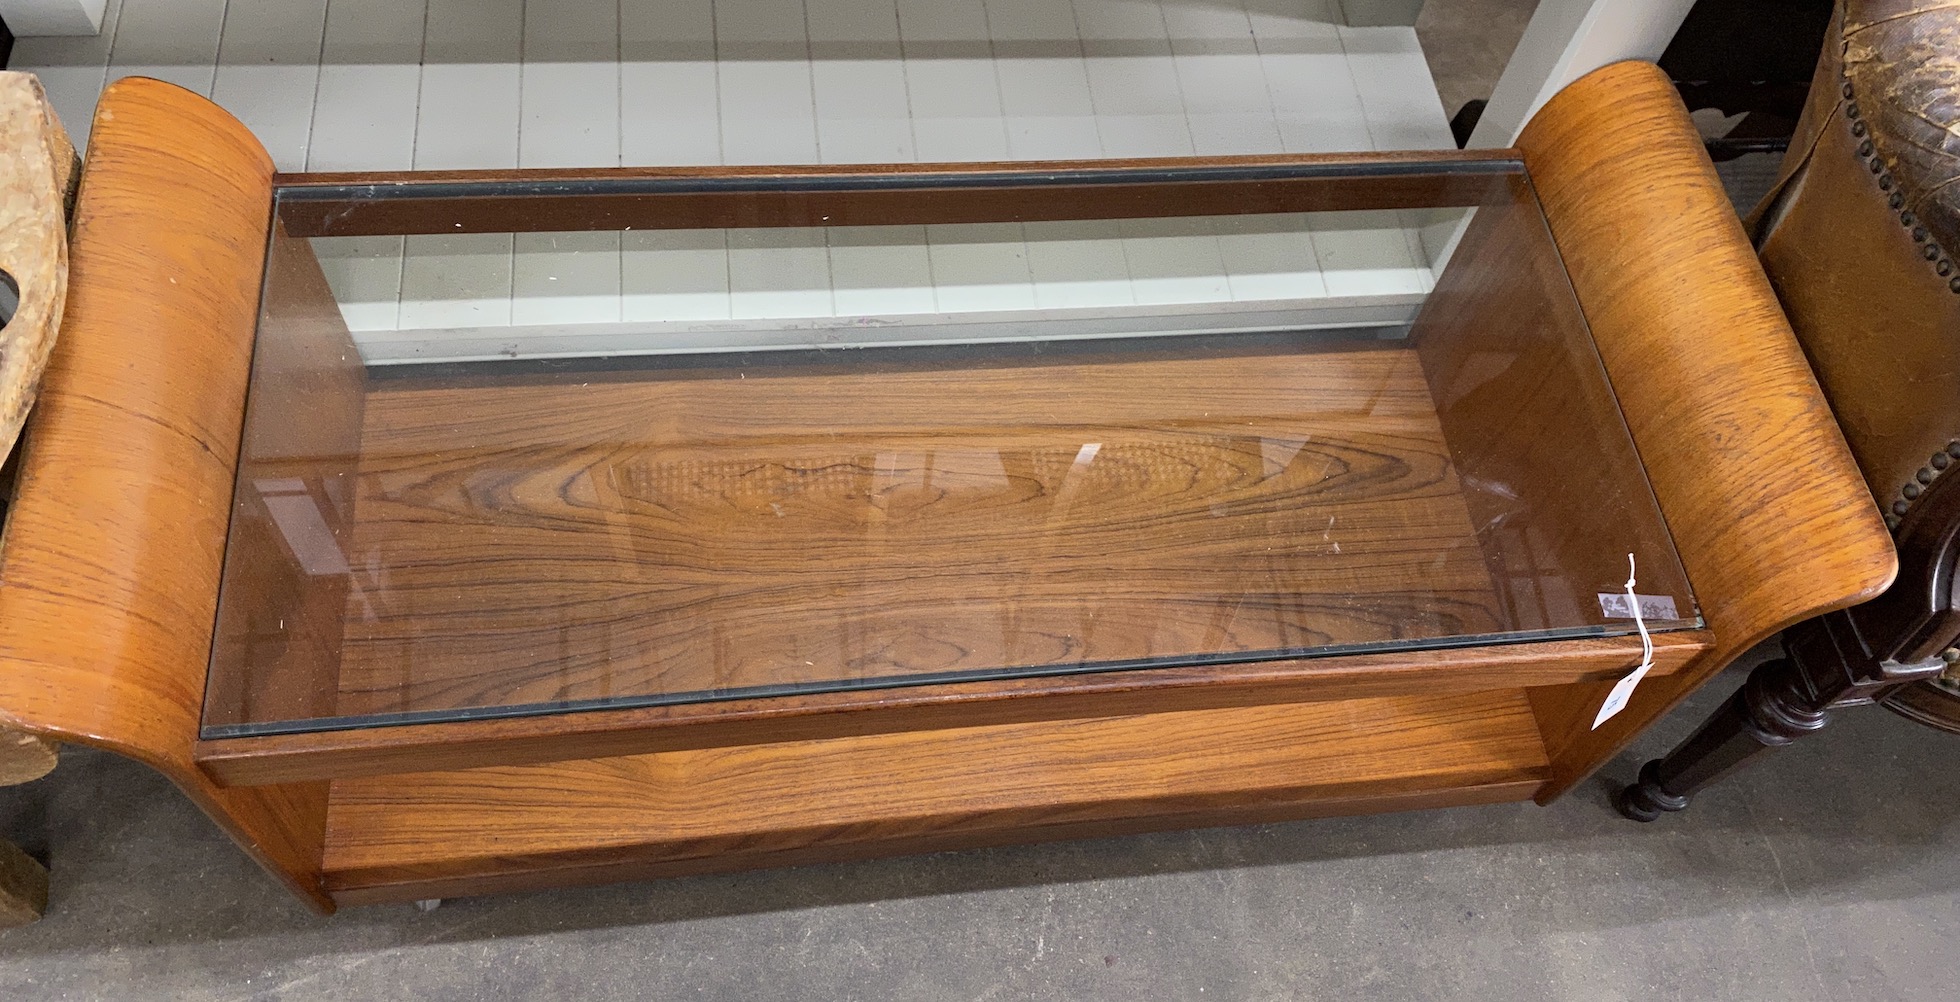 A G Plan teak 'surf board' coffee table, length 120cm, depth 49cm, height 51cm